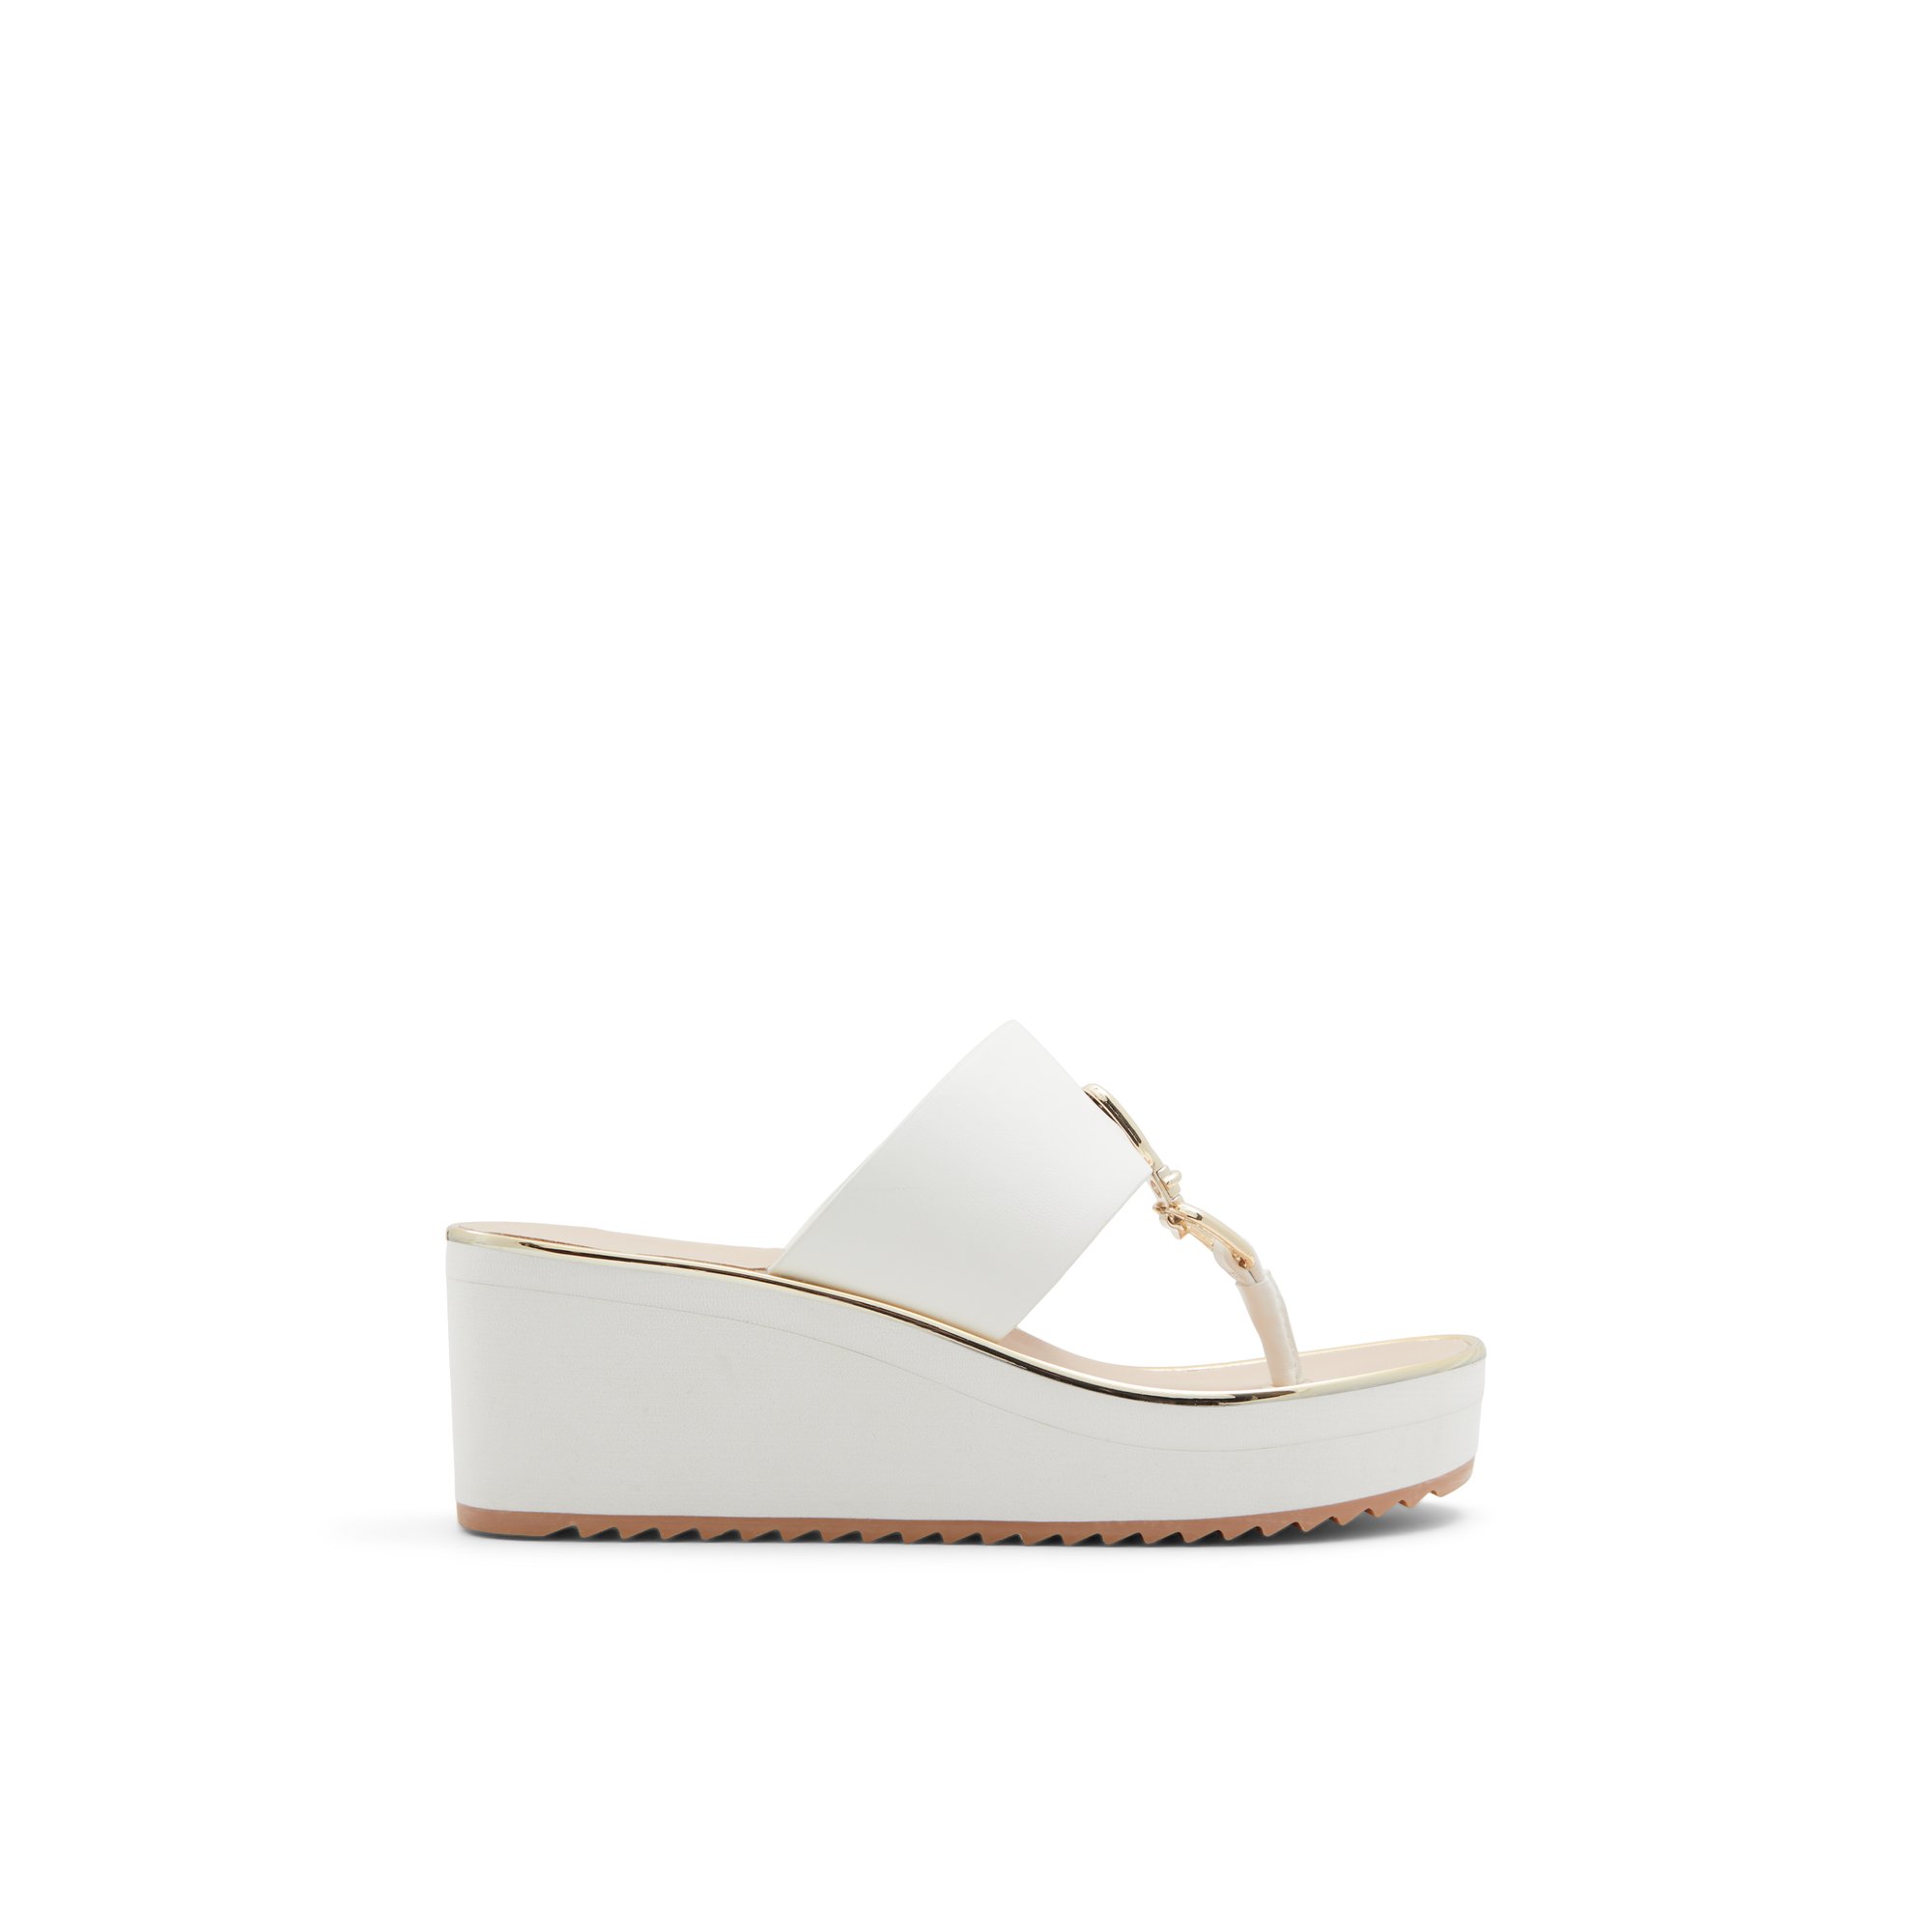 ALDO Maesllan - Women's Wedge Sandals - White